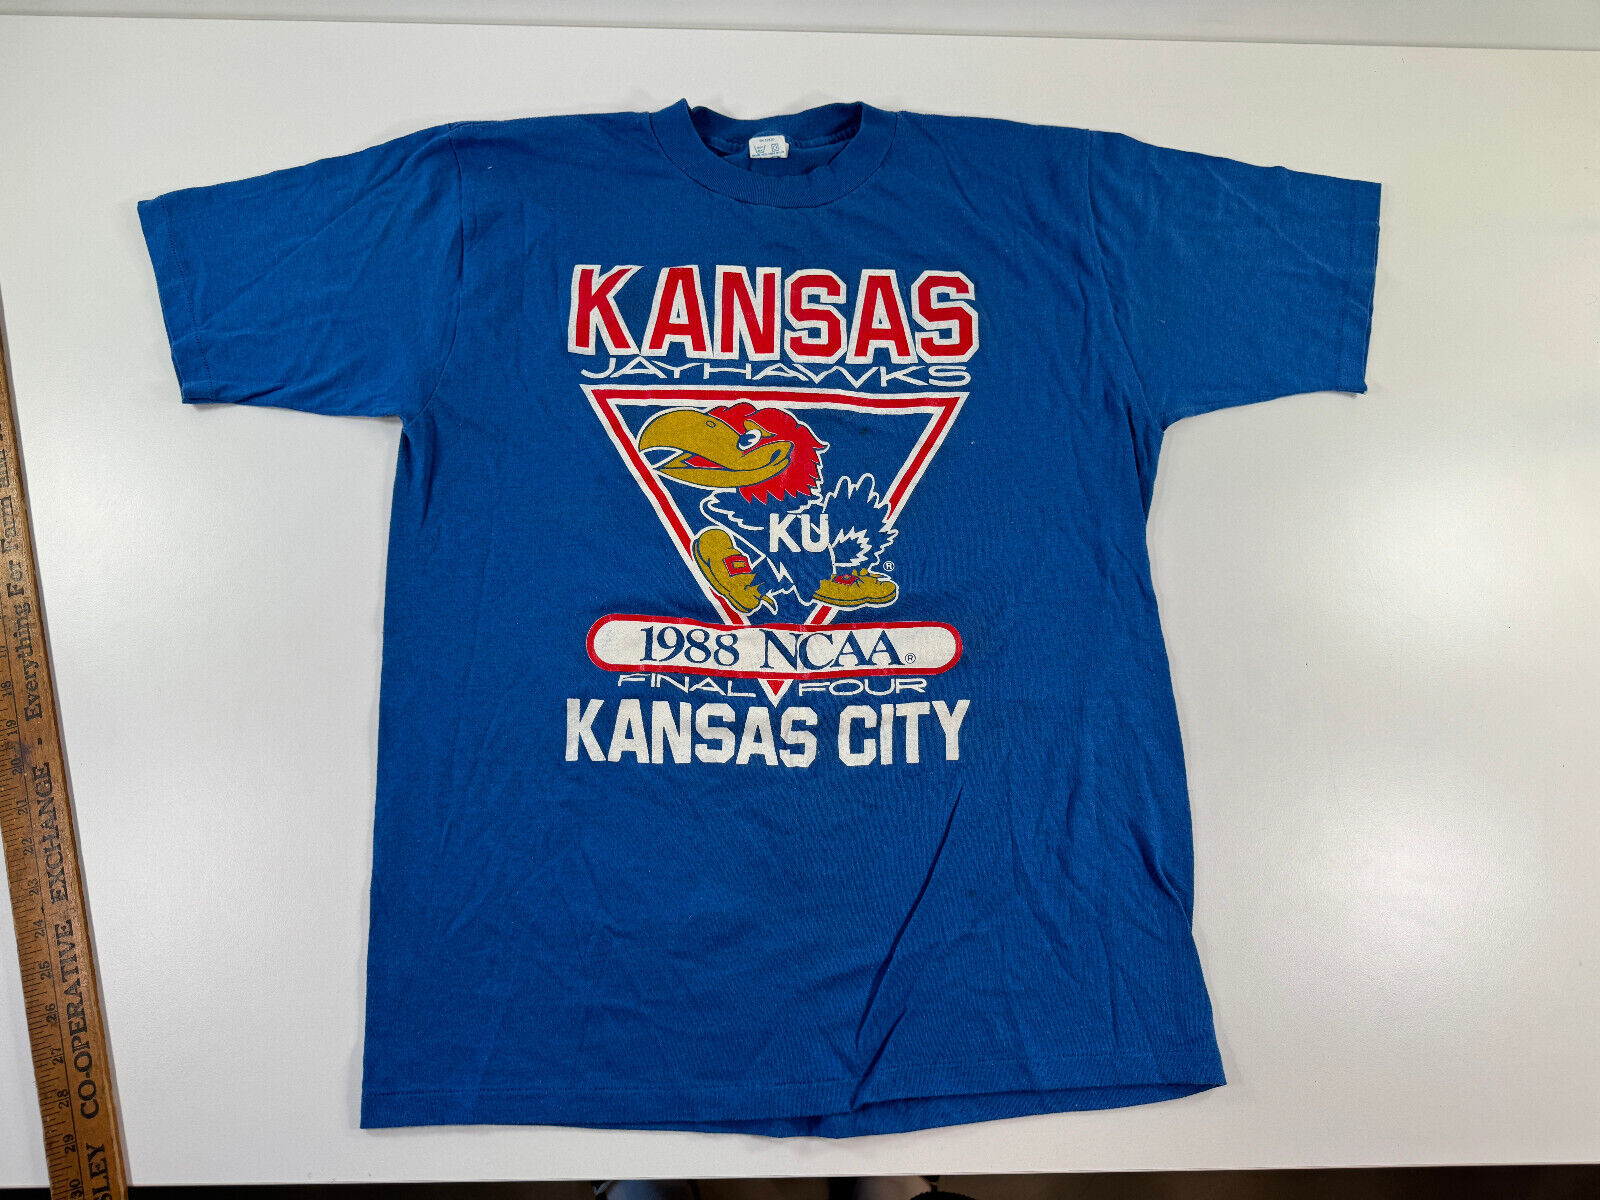 vtg KU University of Kansas Jayhawk T-Shirt 1988 NCAA Final Four Kansas City LG